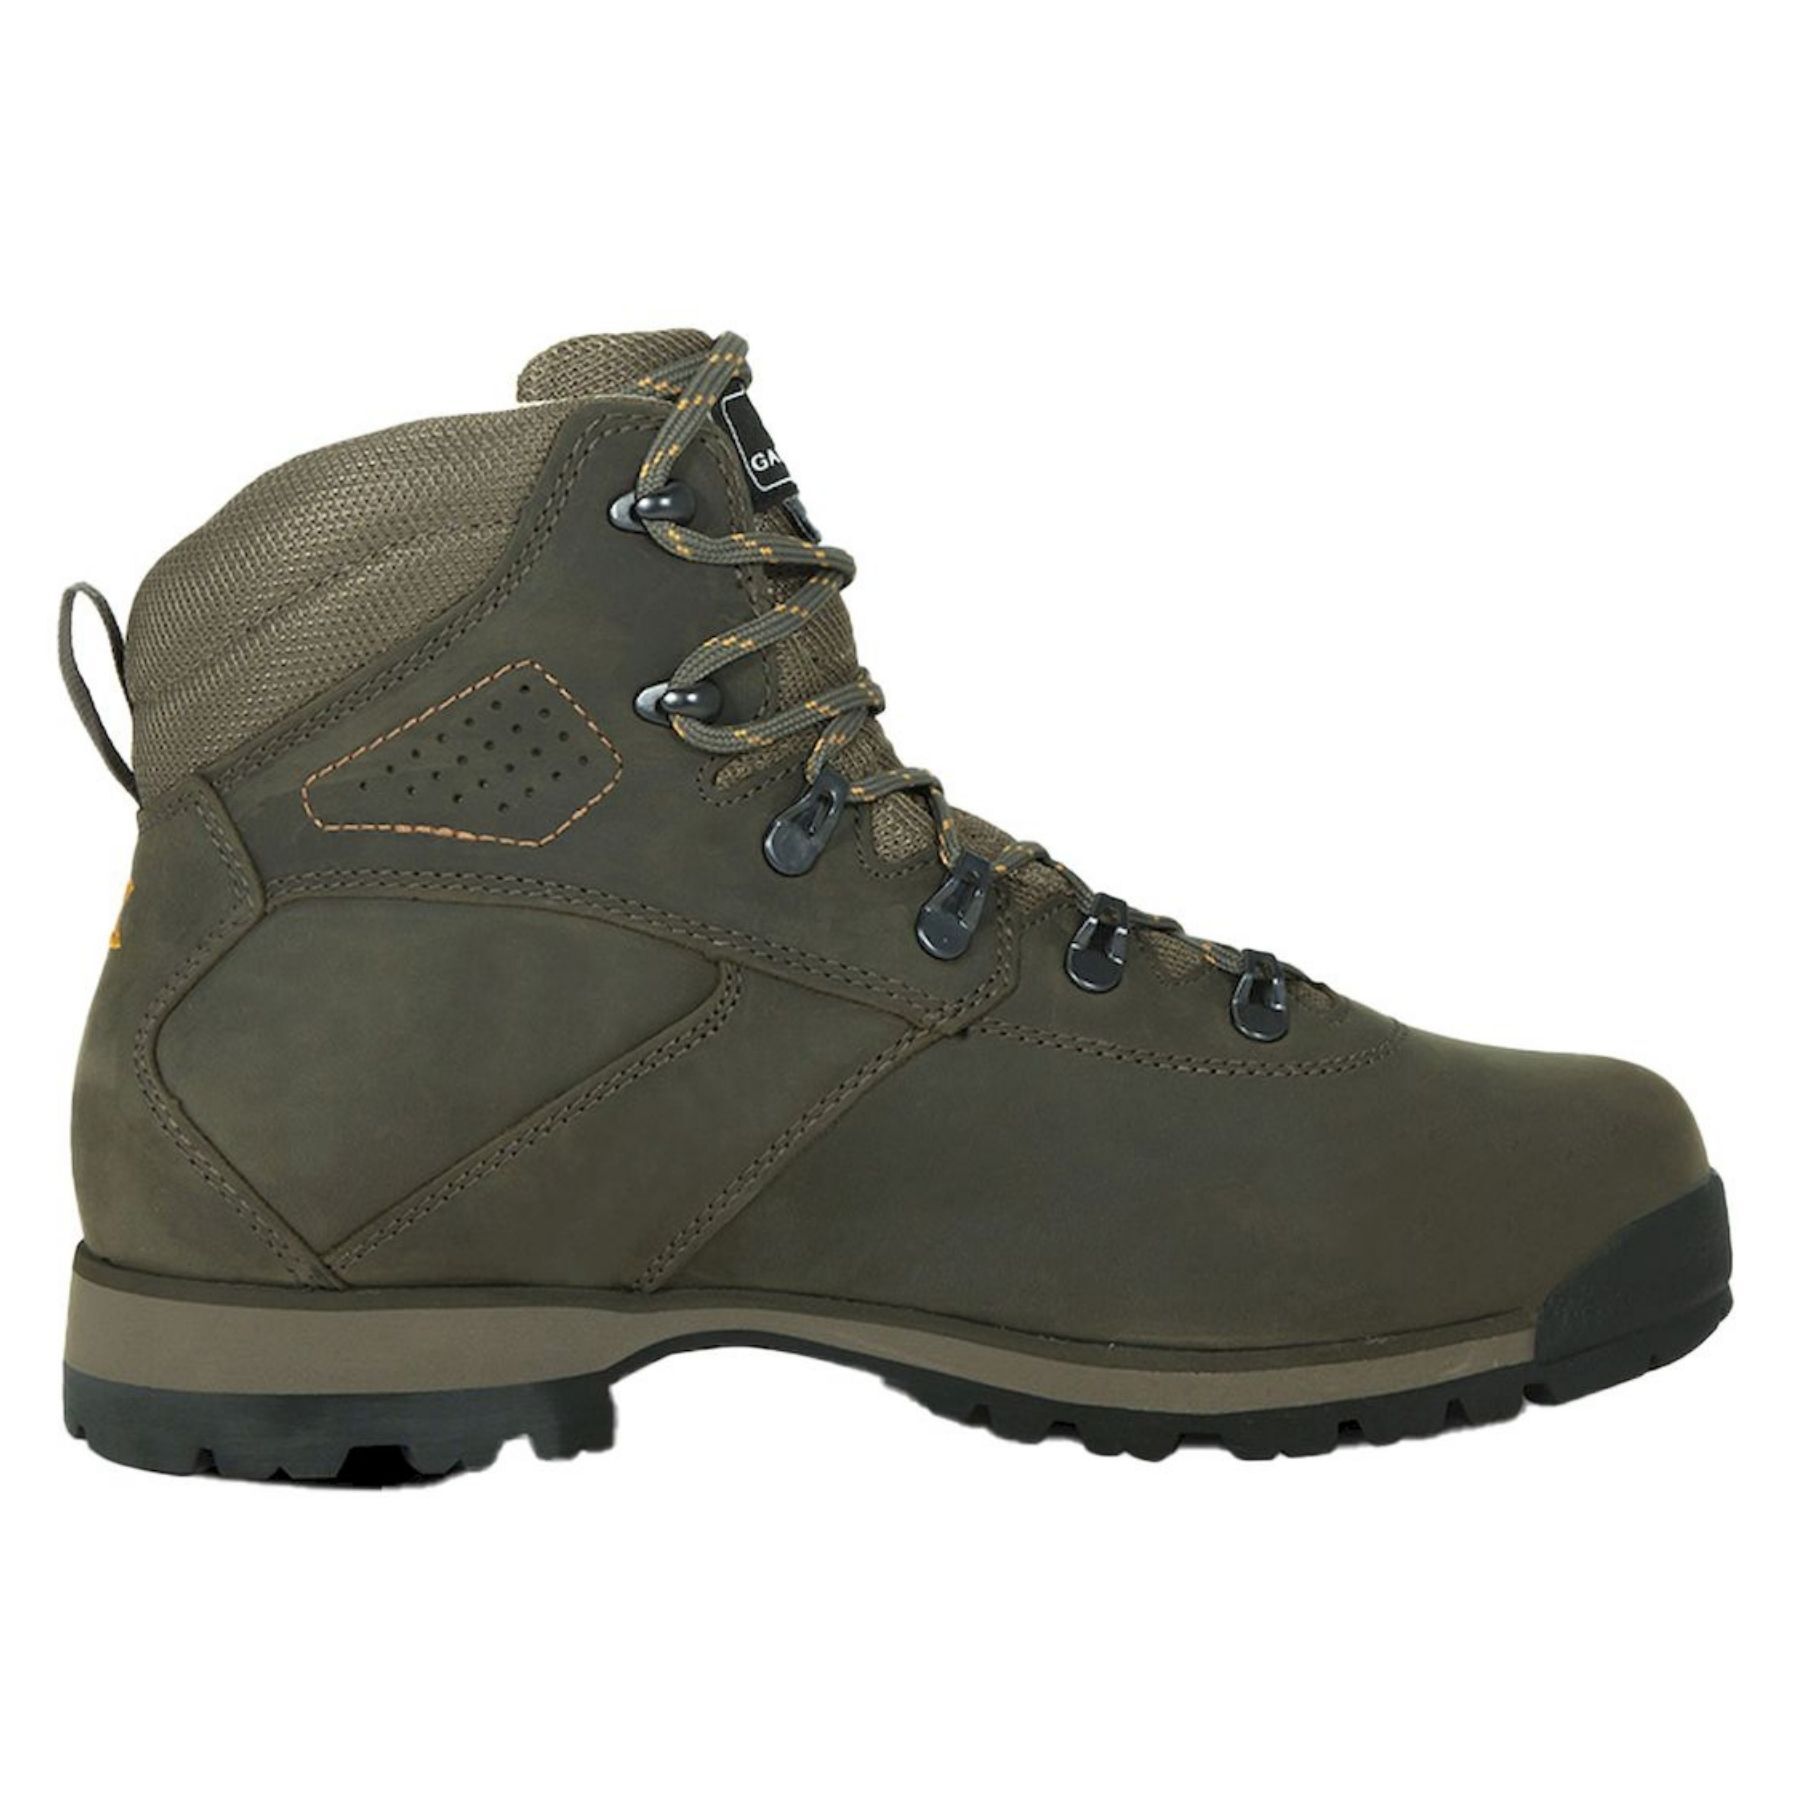 Garmont Pordoi Nubuck GTX - Hiking boots - Men's